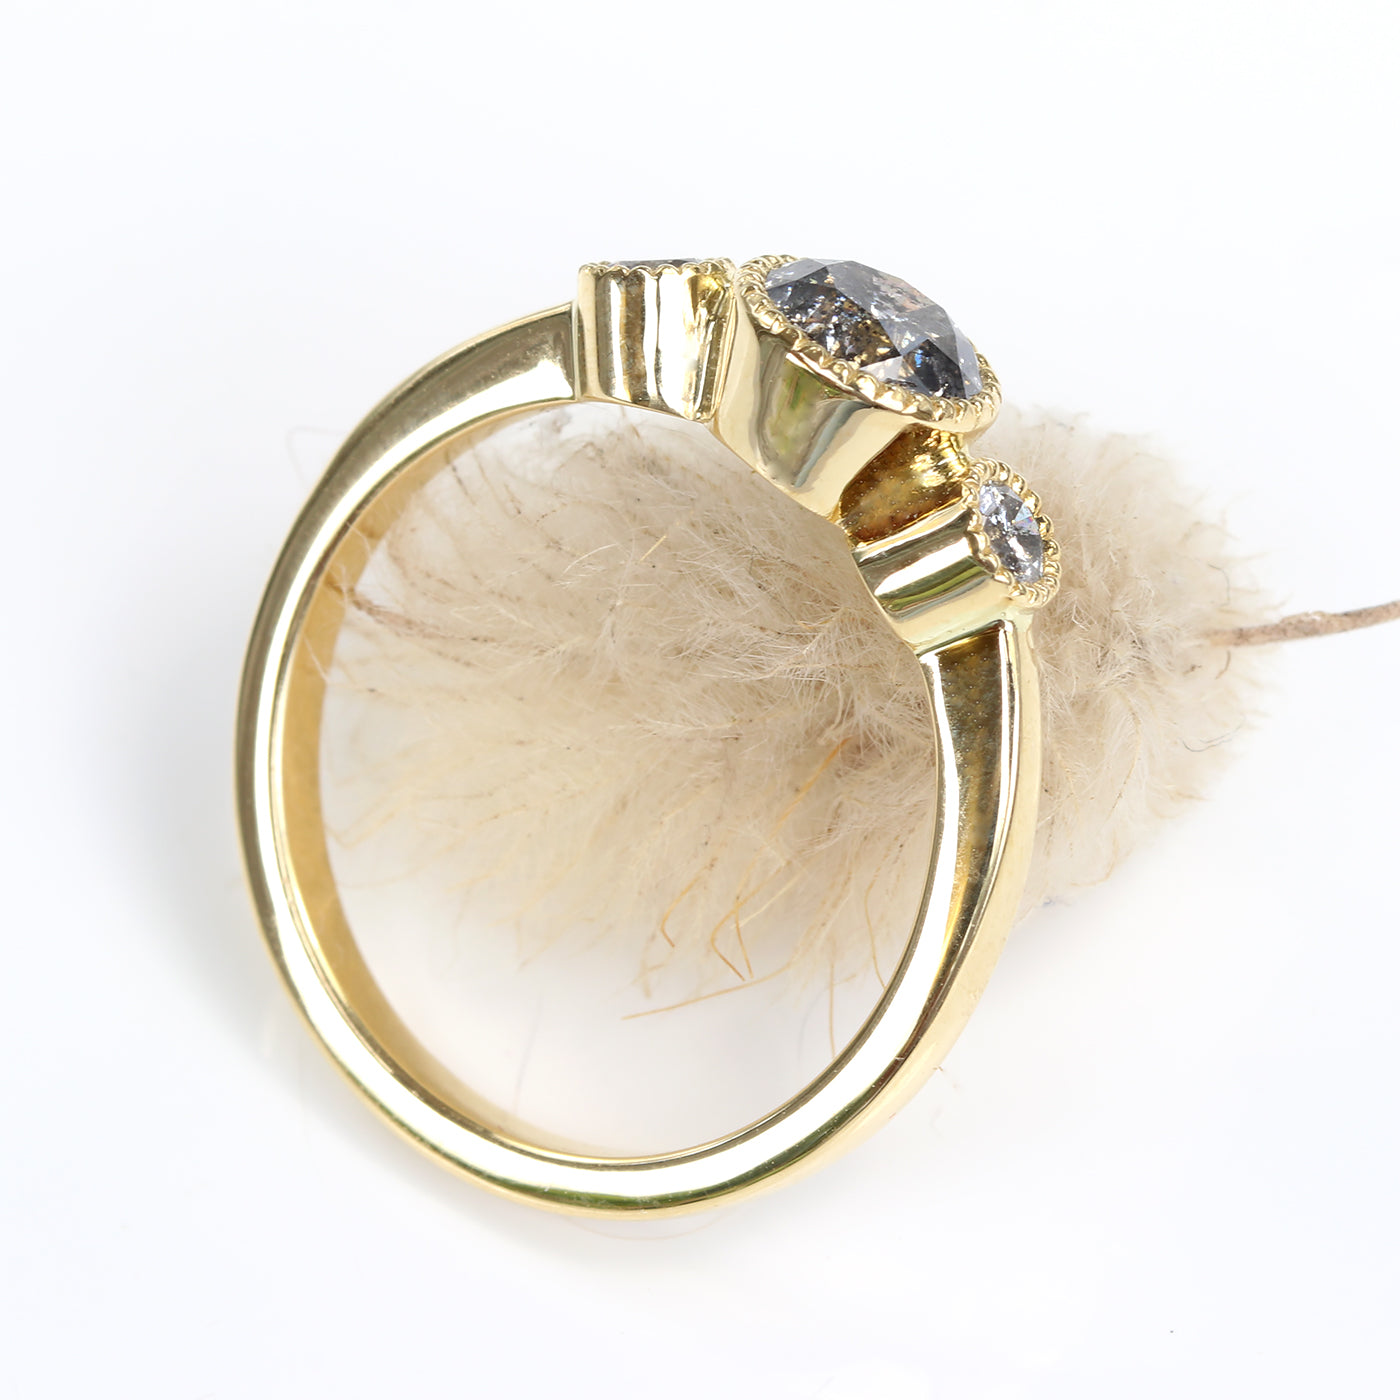 18ct Gold Salt and Pepper Diamond Trilogy Engagement Ring (Size L, Resize J - M)